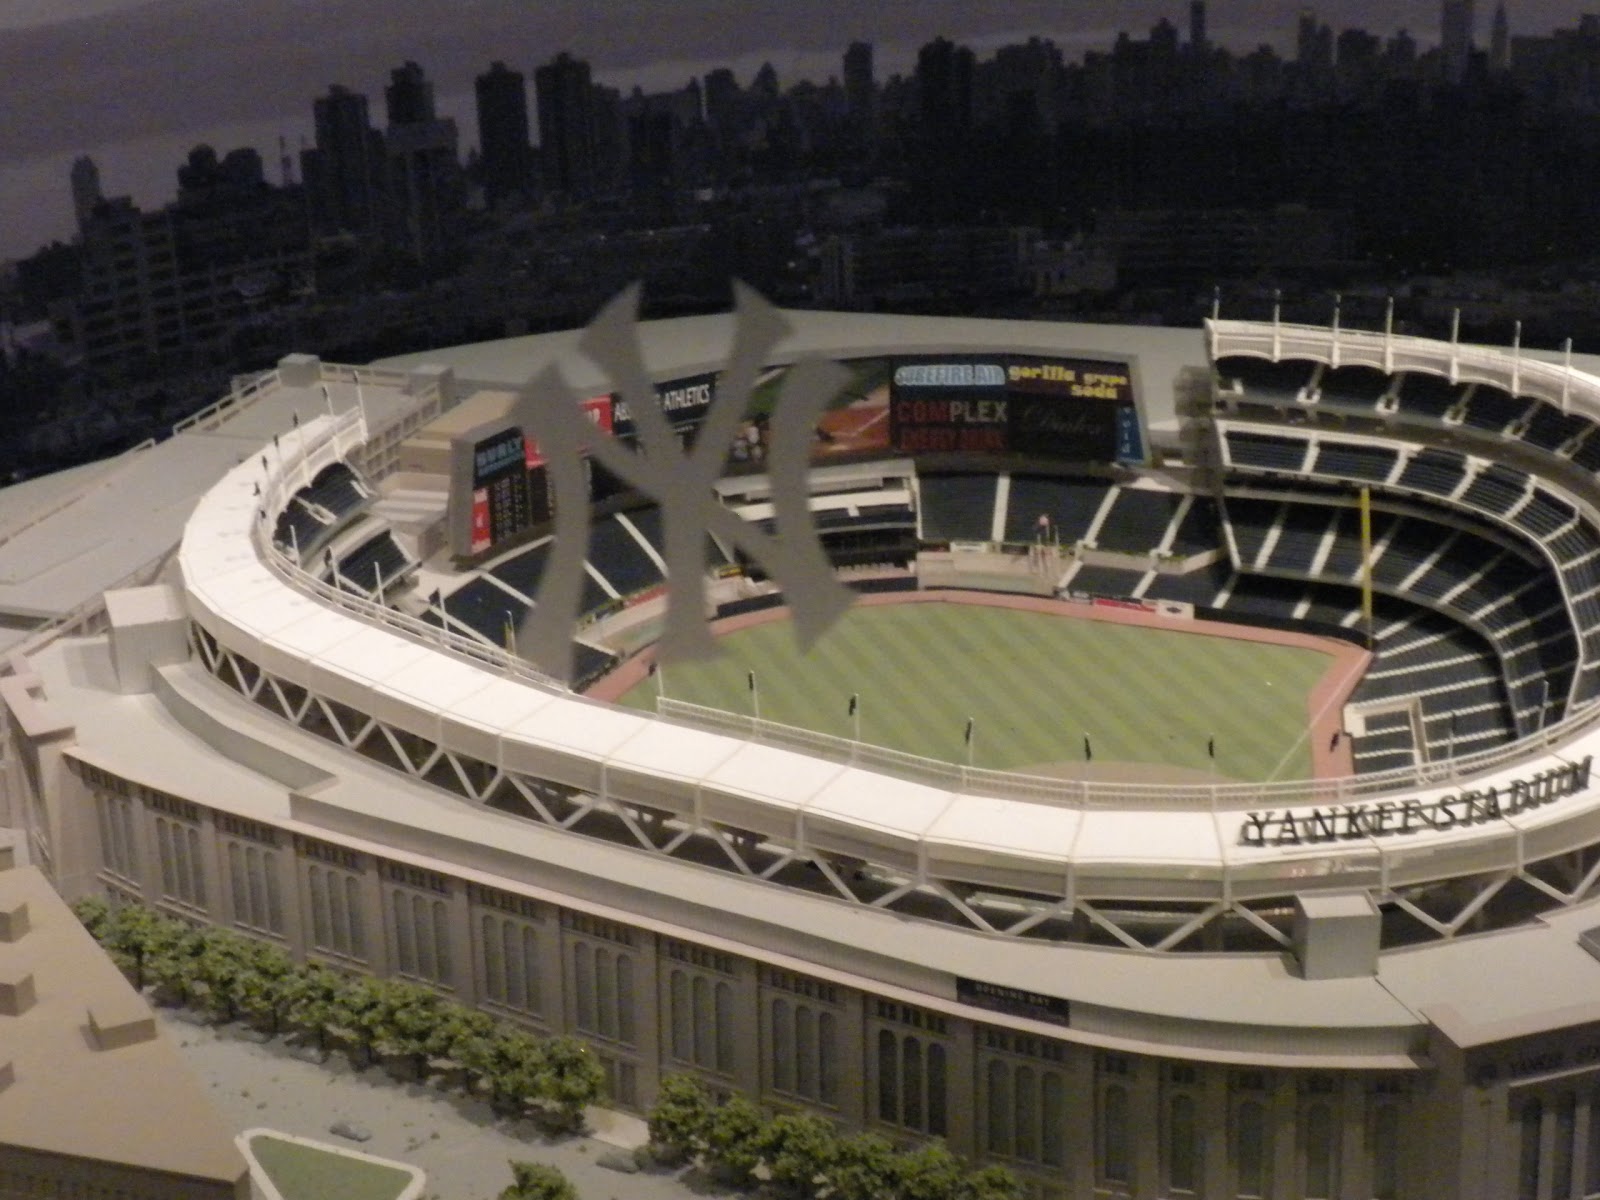 Photo of 161 St - Yankee Stadium in New York City, New York, United States - 3 Picture of Point of interest, Establishment, Transit station, Subway station